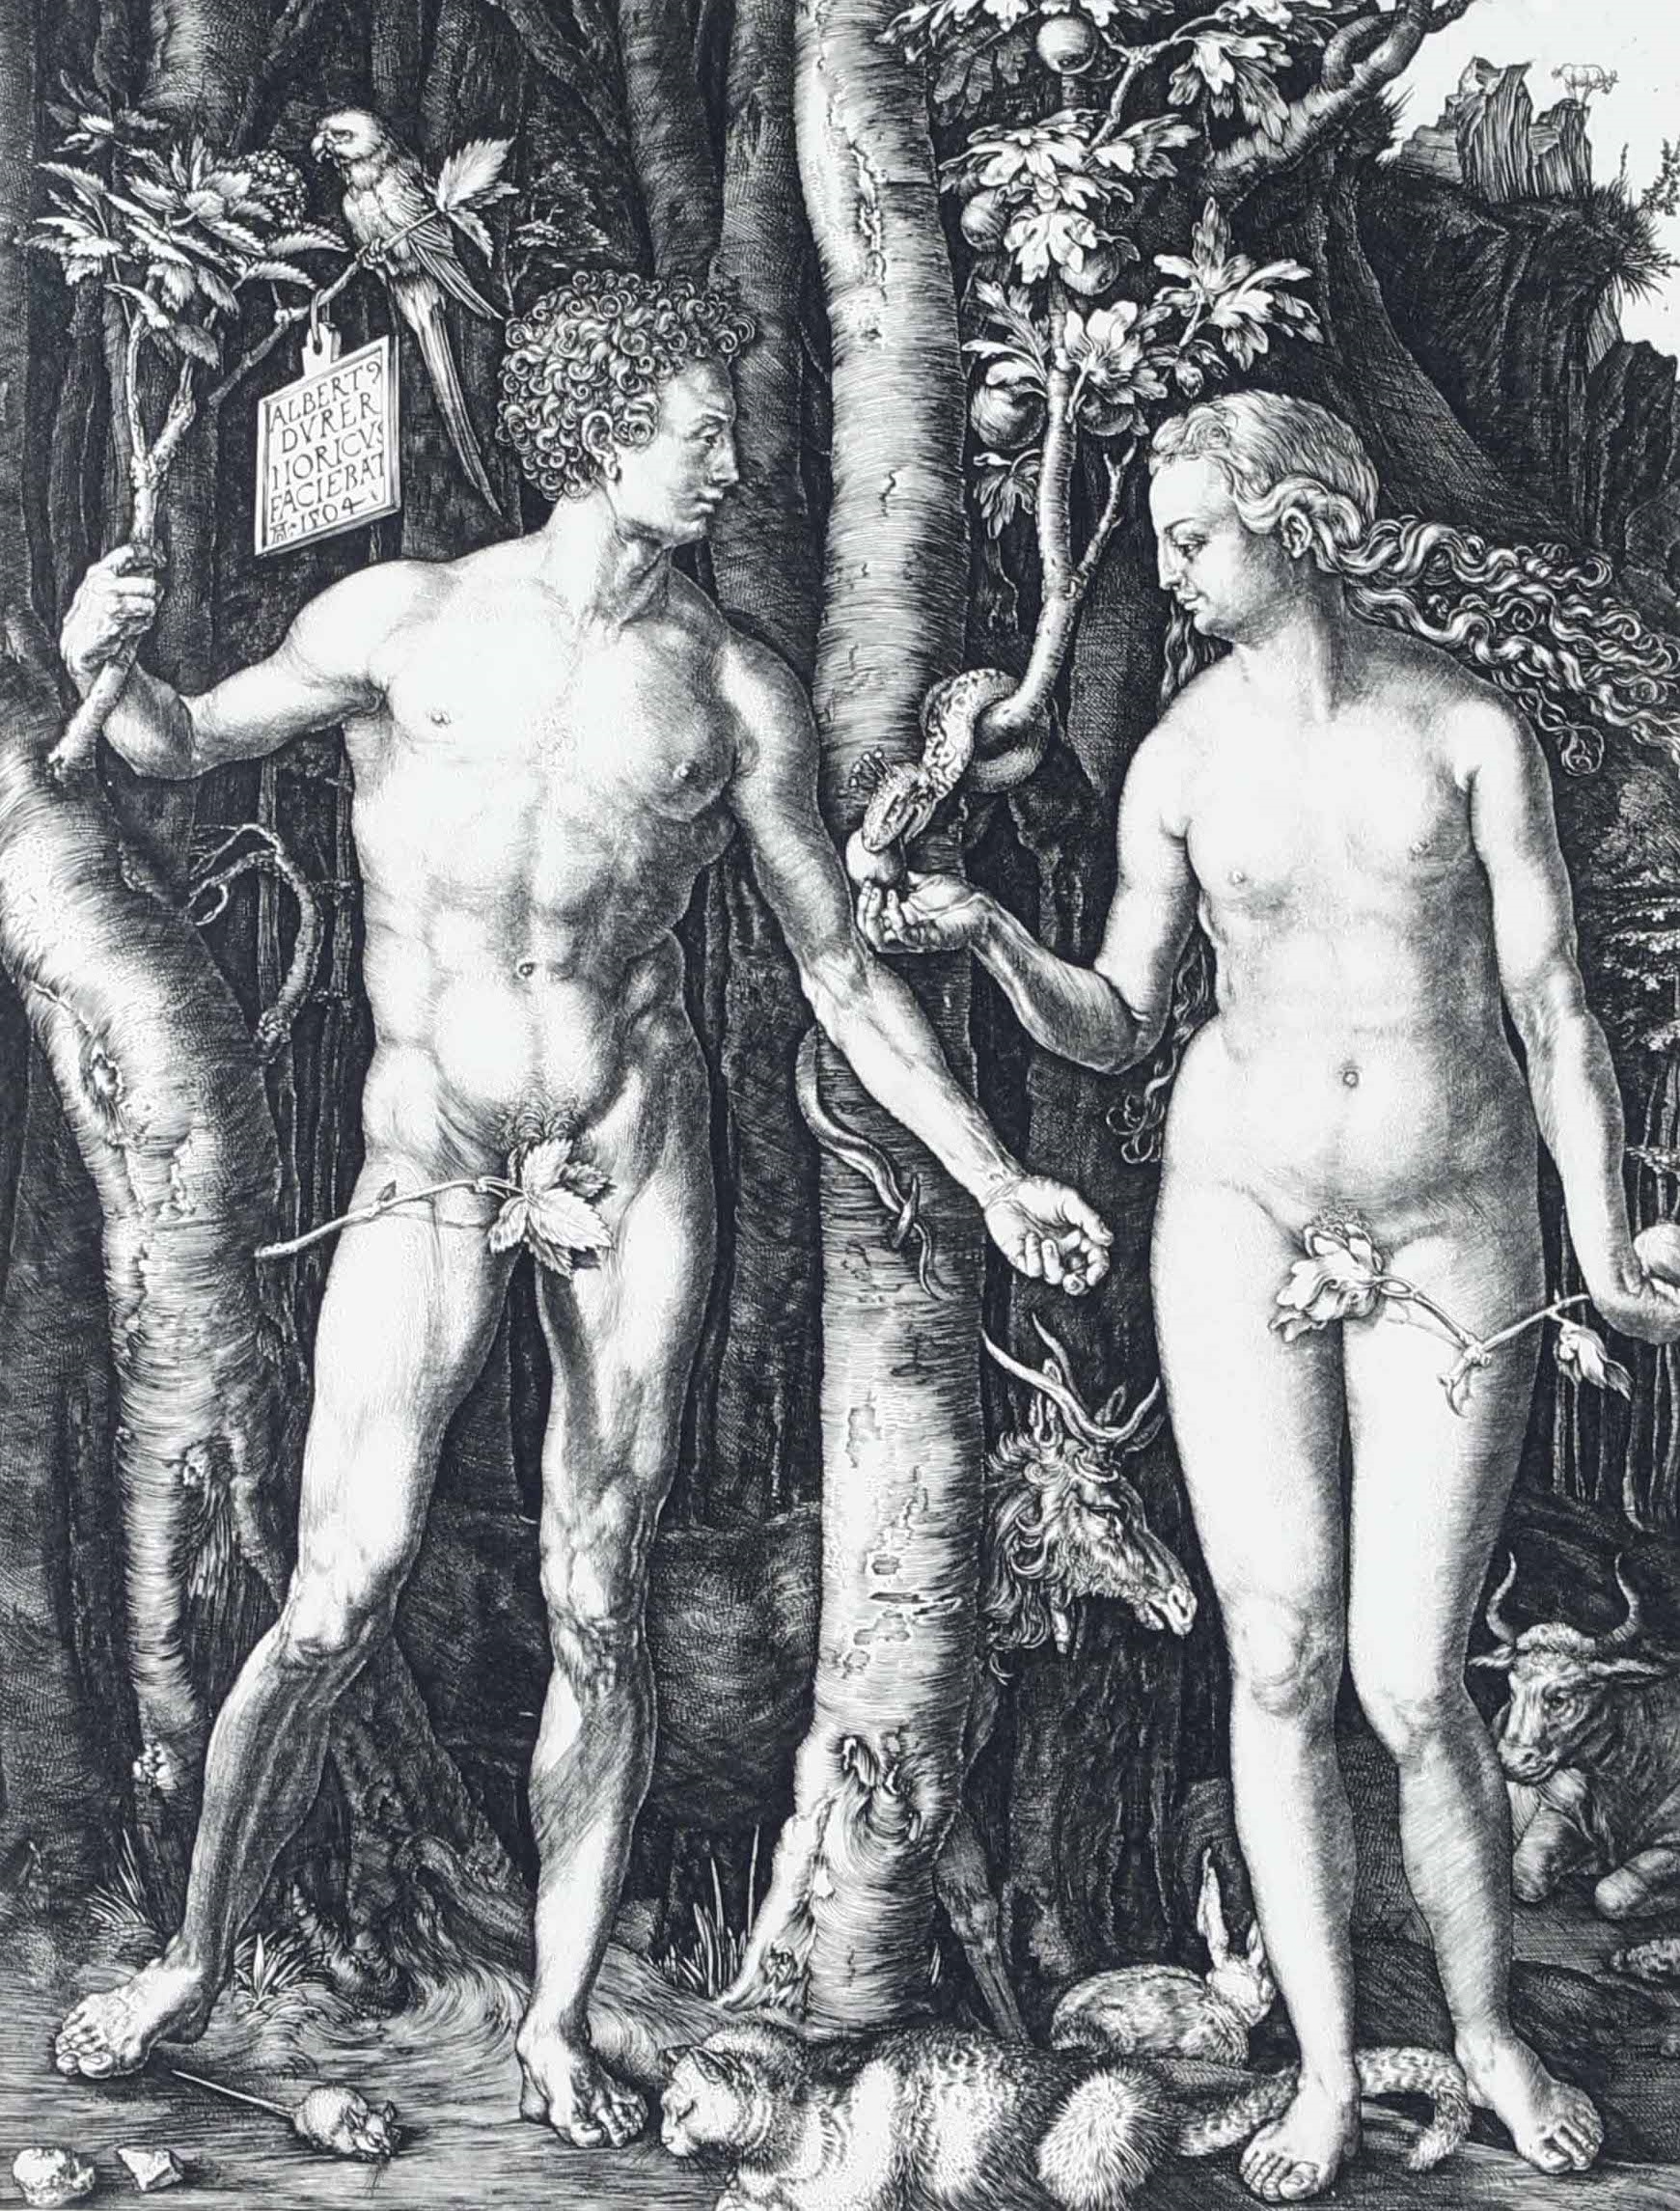 Artwork by Albrecht Dürer, Peccato originale d'Adamo ed Eva, Made of Engraving.